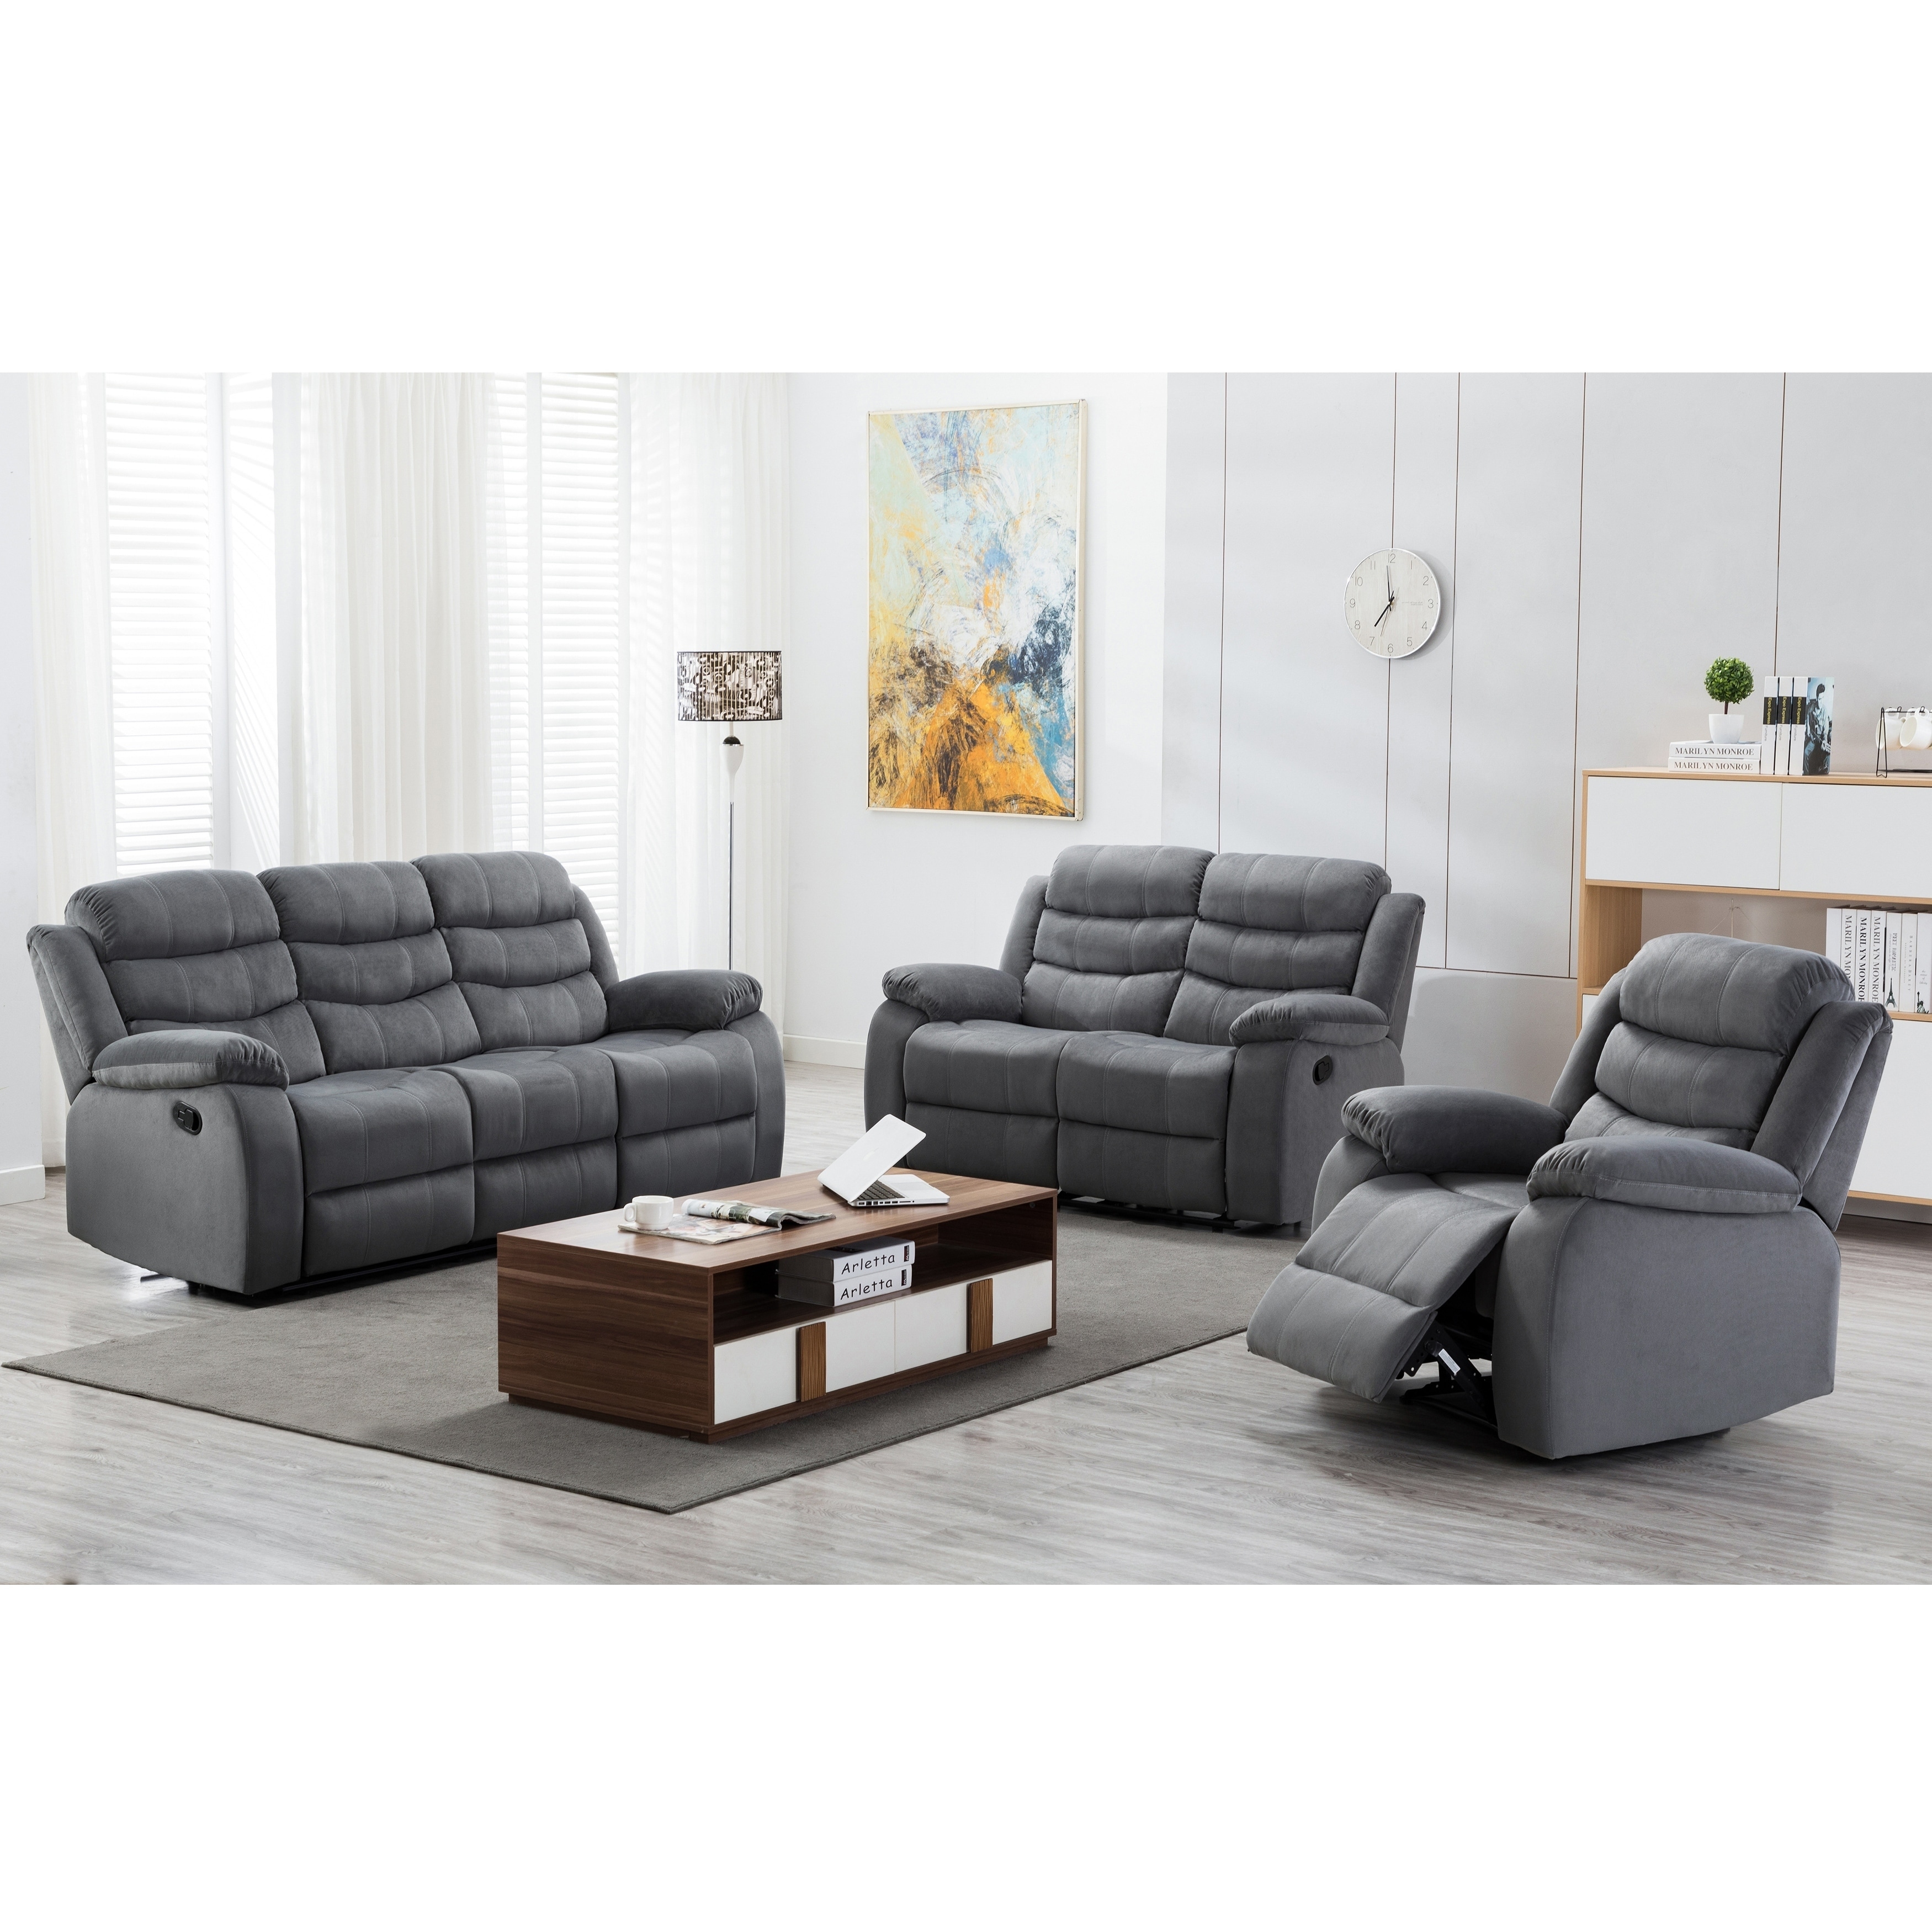 Jim Grey Upholstered Reclining Living Room 3 Piece Sofa Set Overstock 29013441